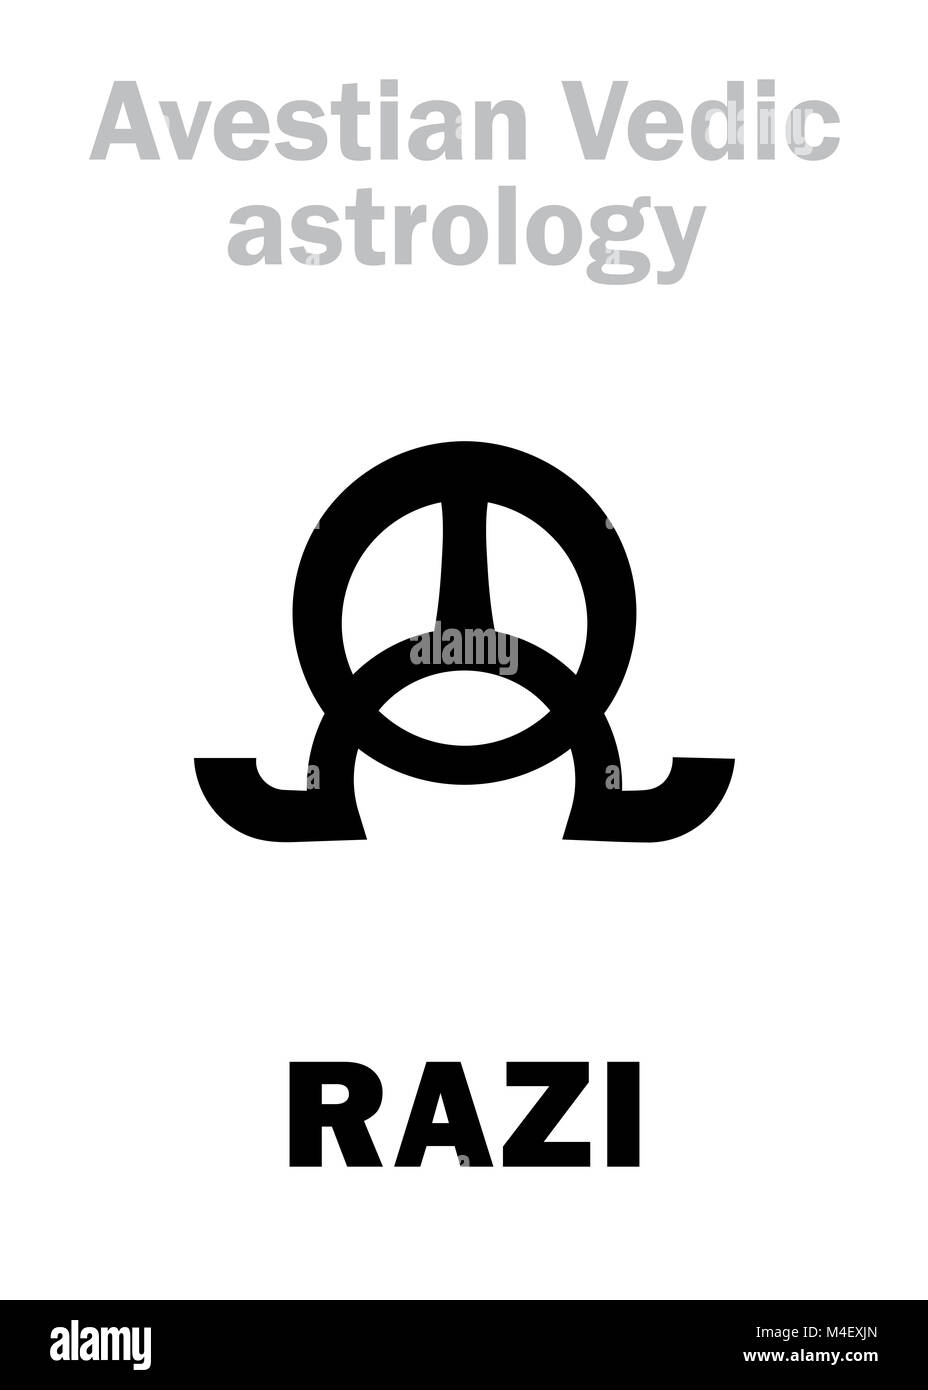 Astrology: astral planet RAZI Stock Photo